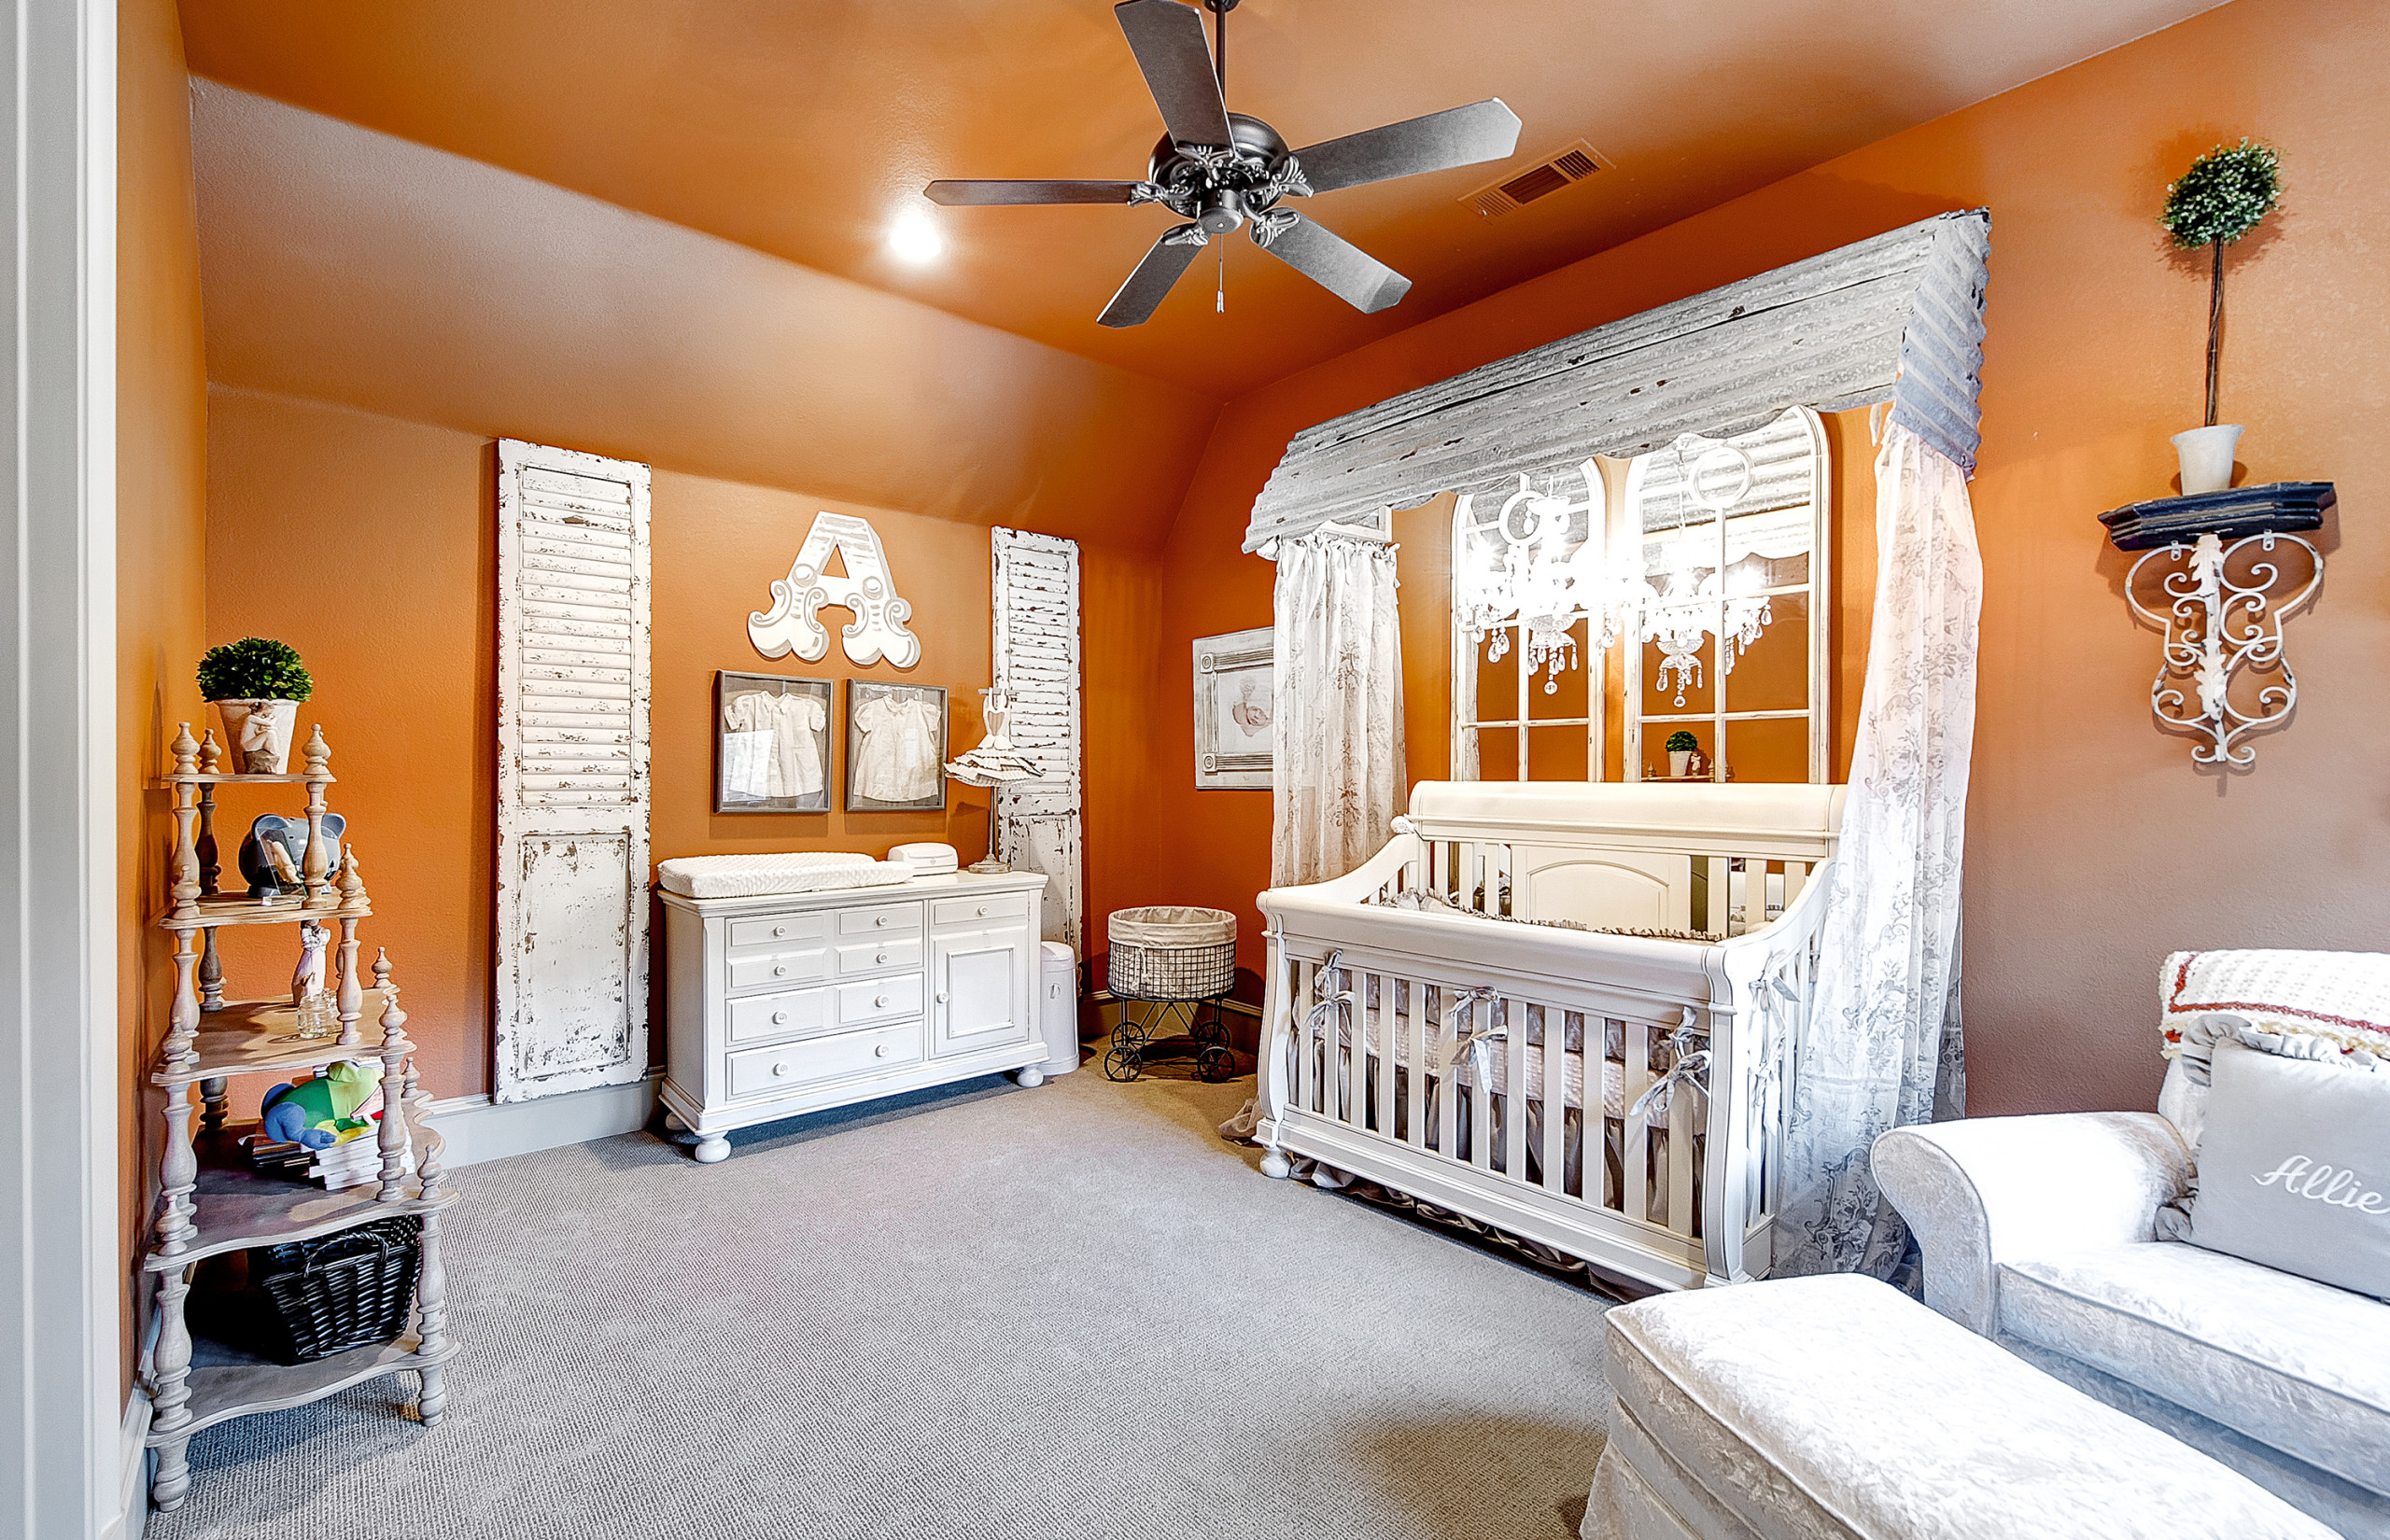 75 Nursery with Orange Walls Ideas You'll Love - August, 2023 | Houzz